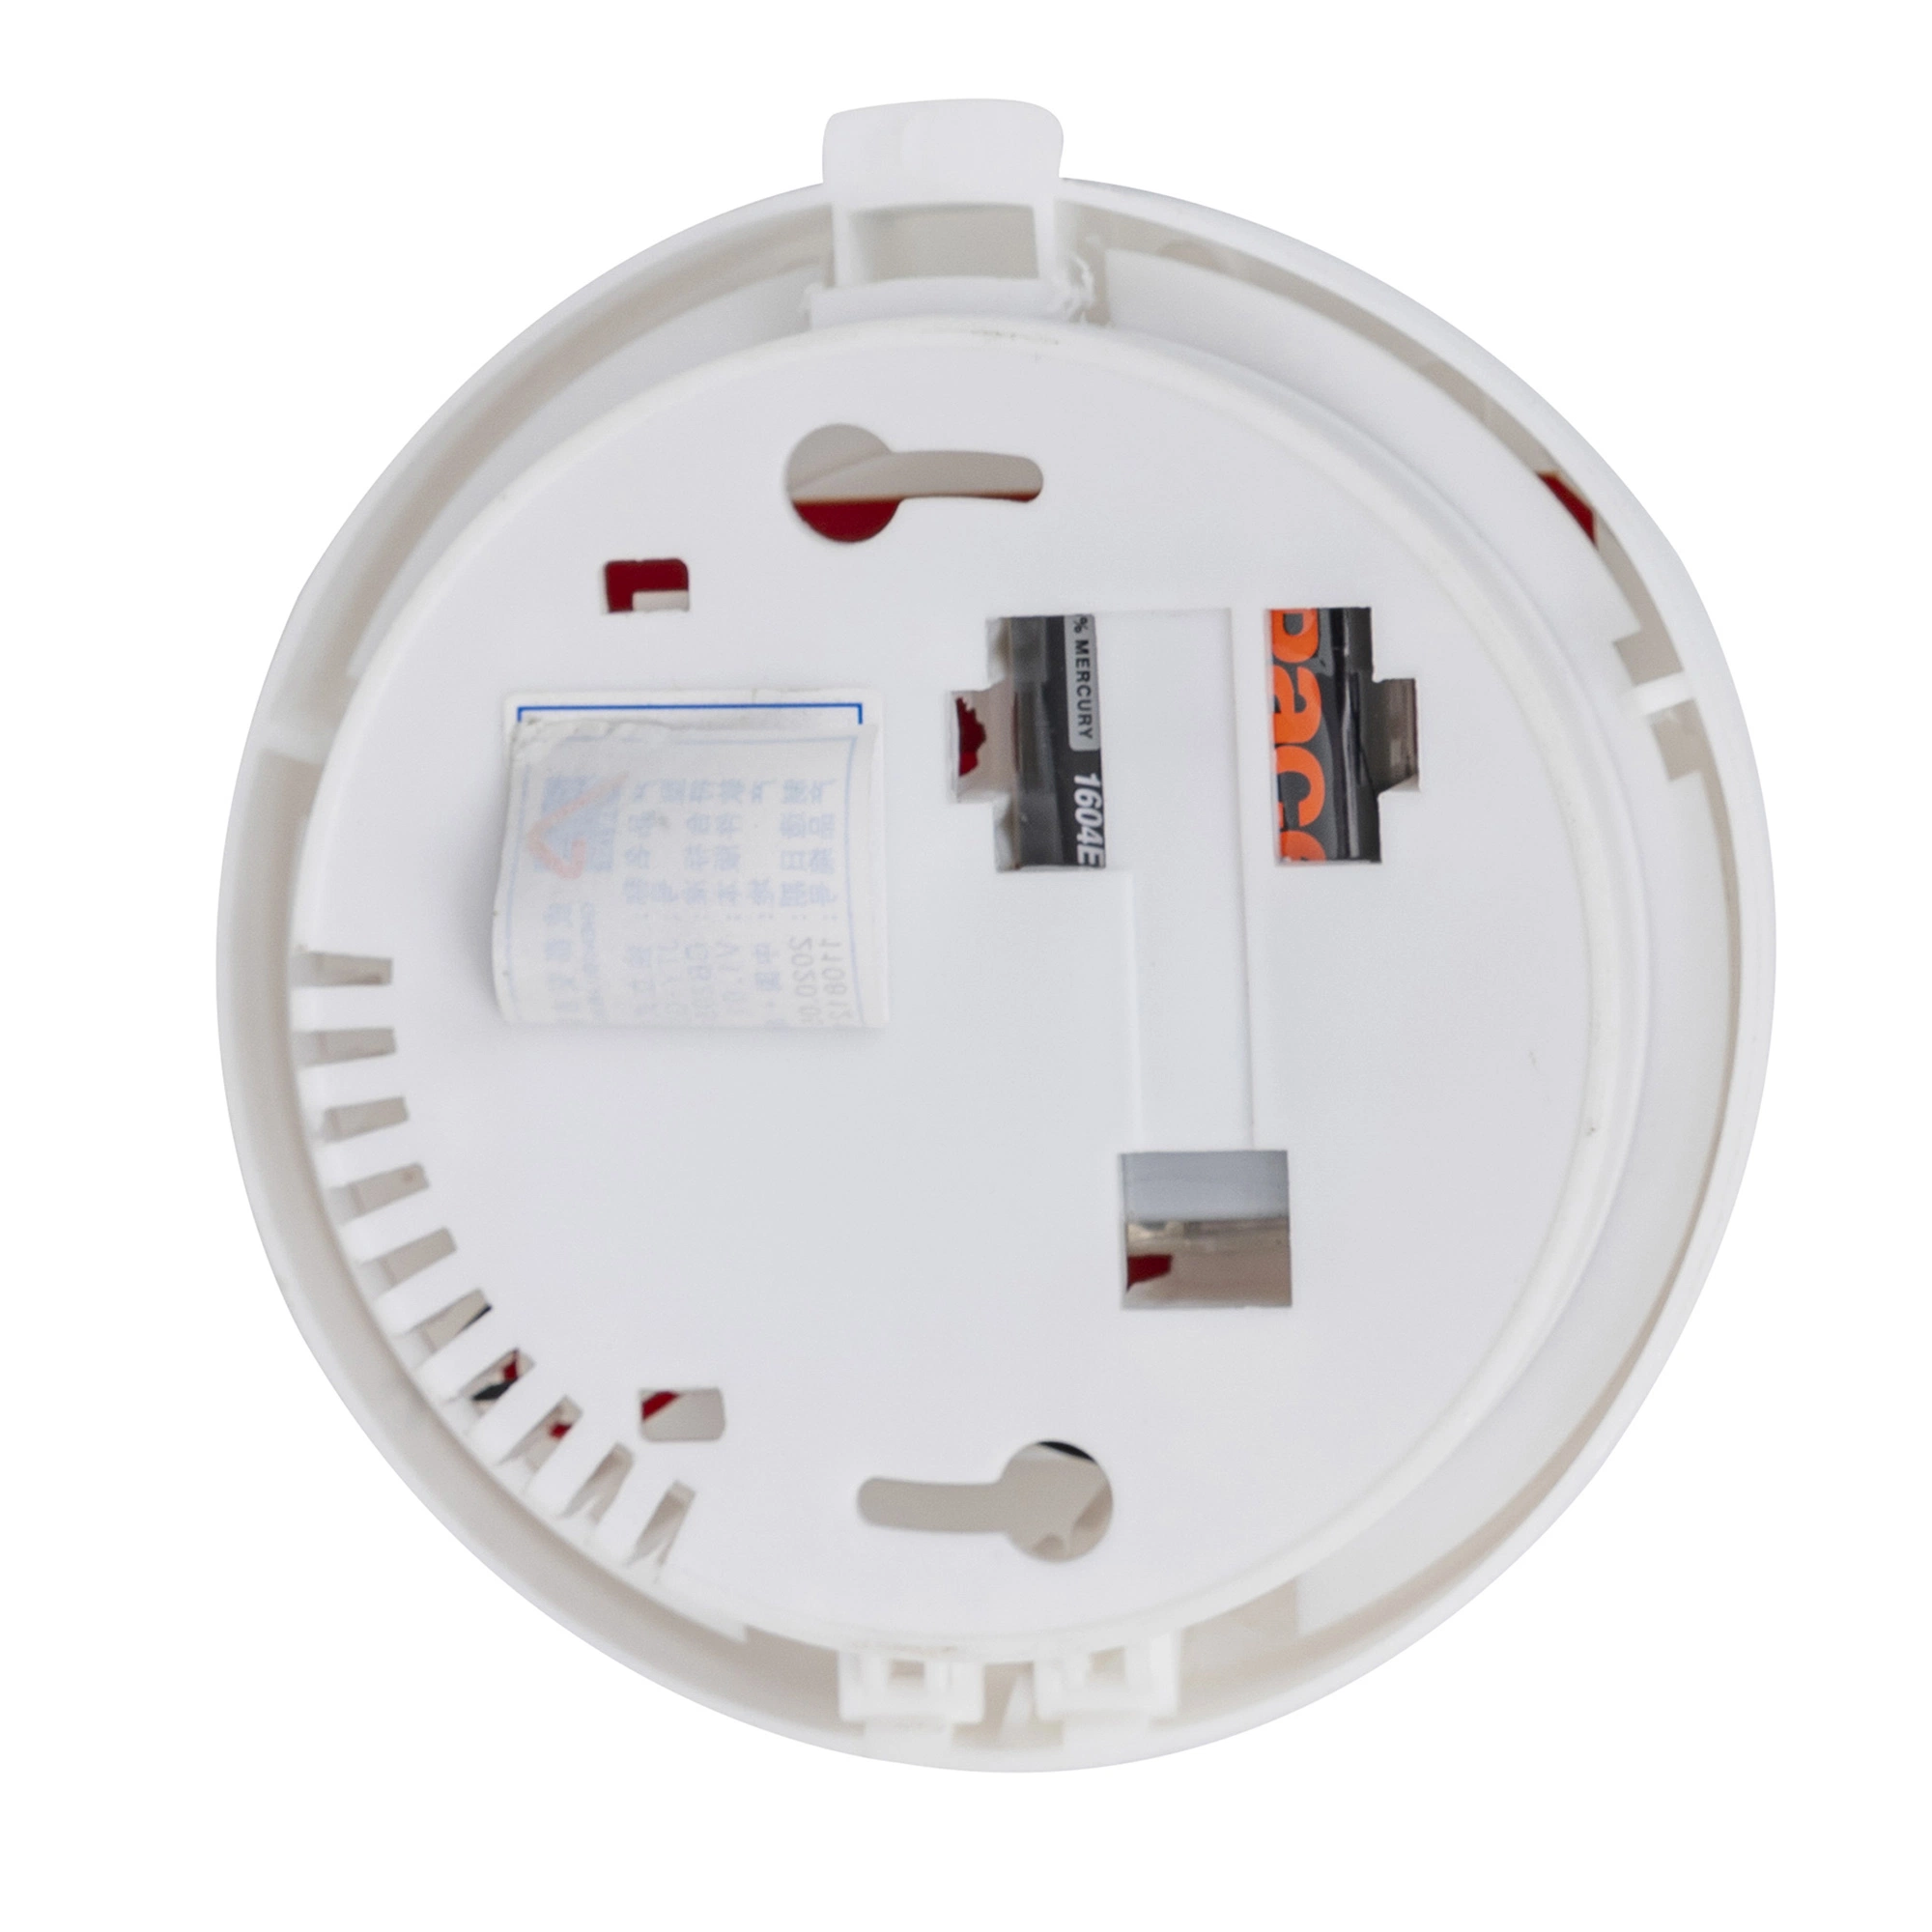 Sanxing Smoke Alarm Sensor for Home Office Security Photoelectric Smoke Alarm